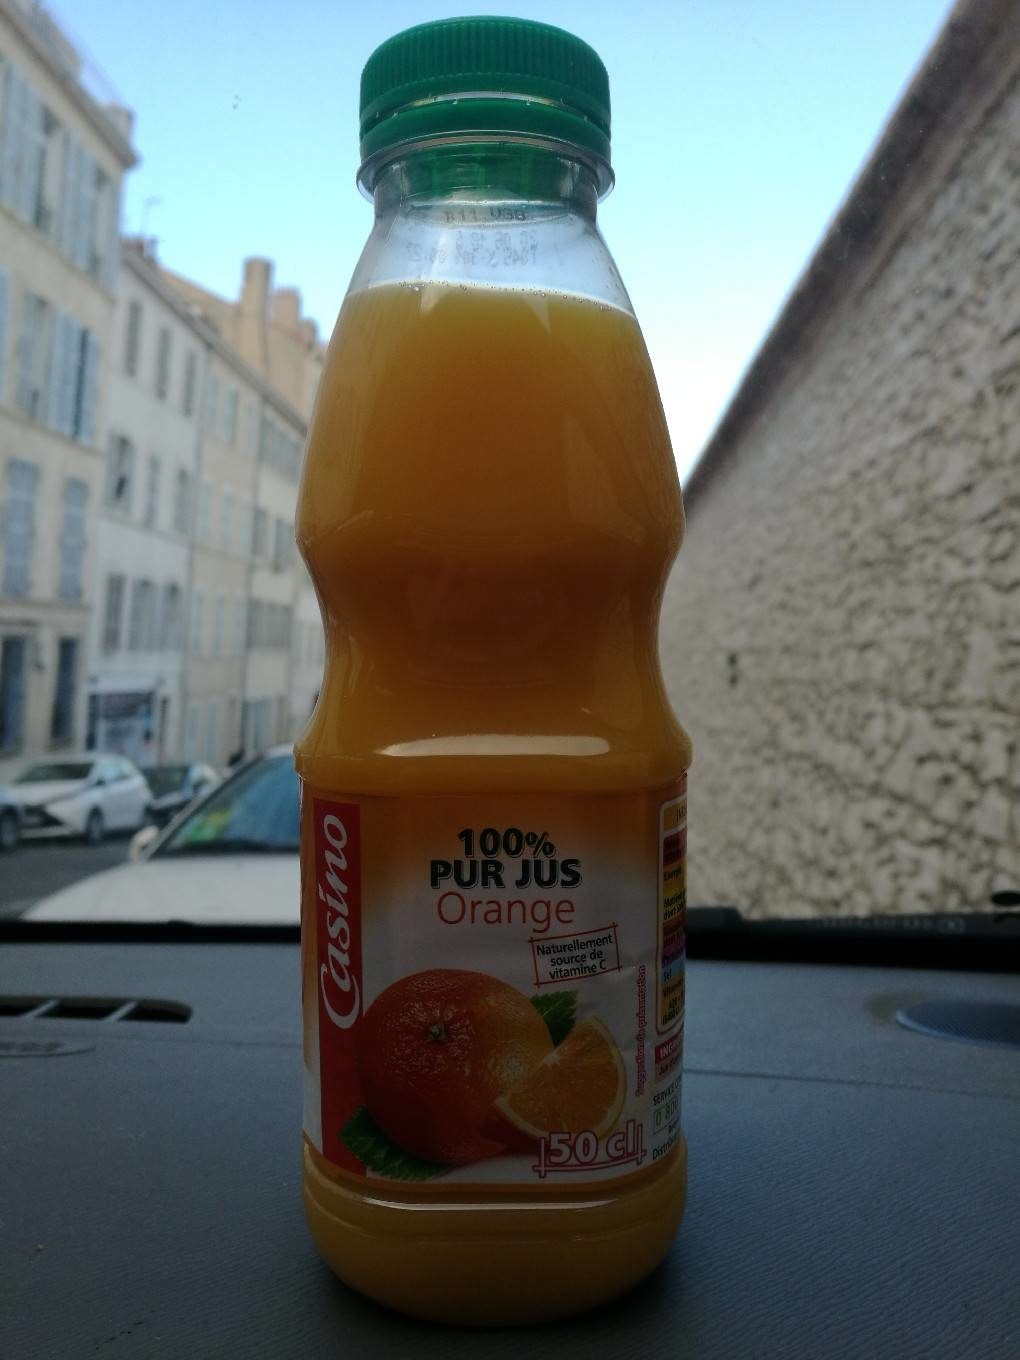 100% Pur Jus Orange - Product - fr